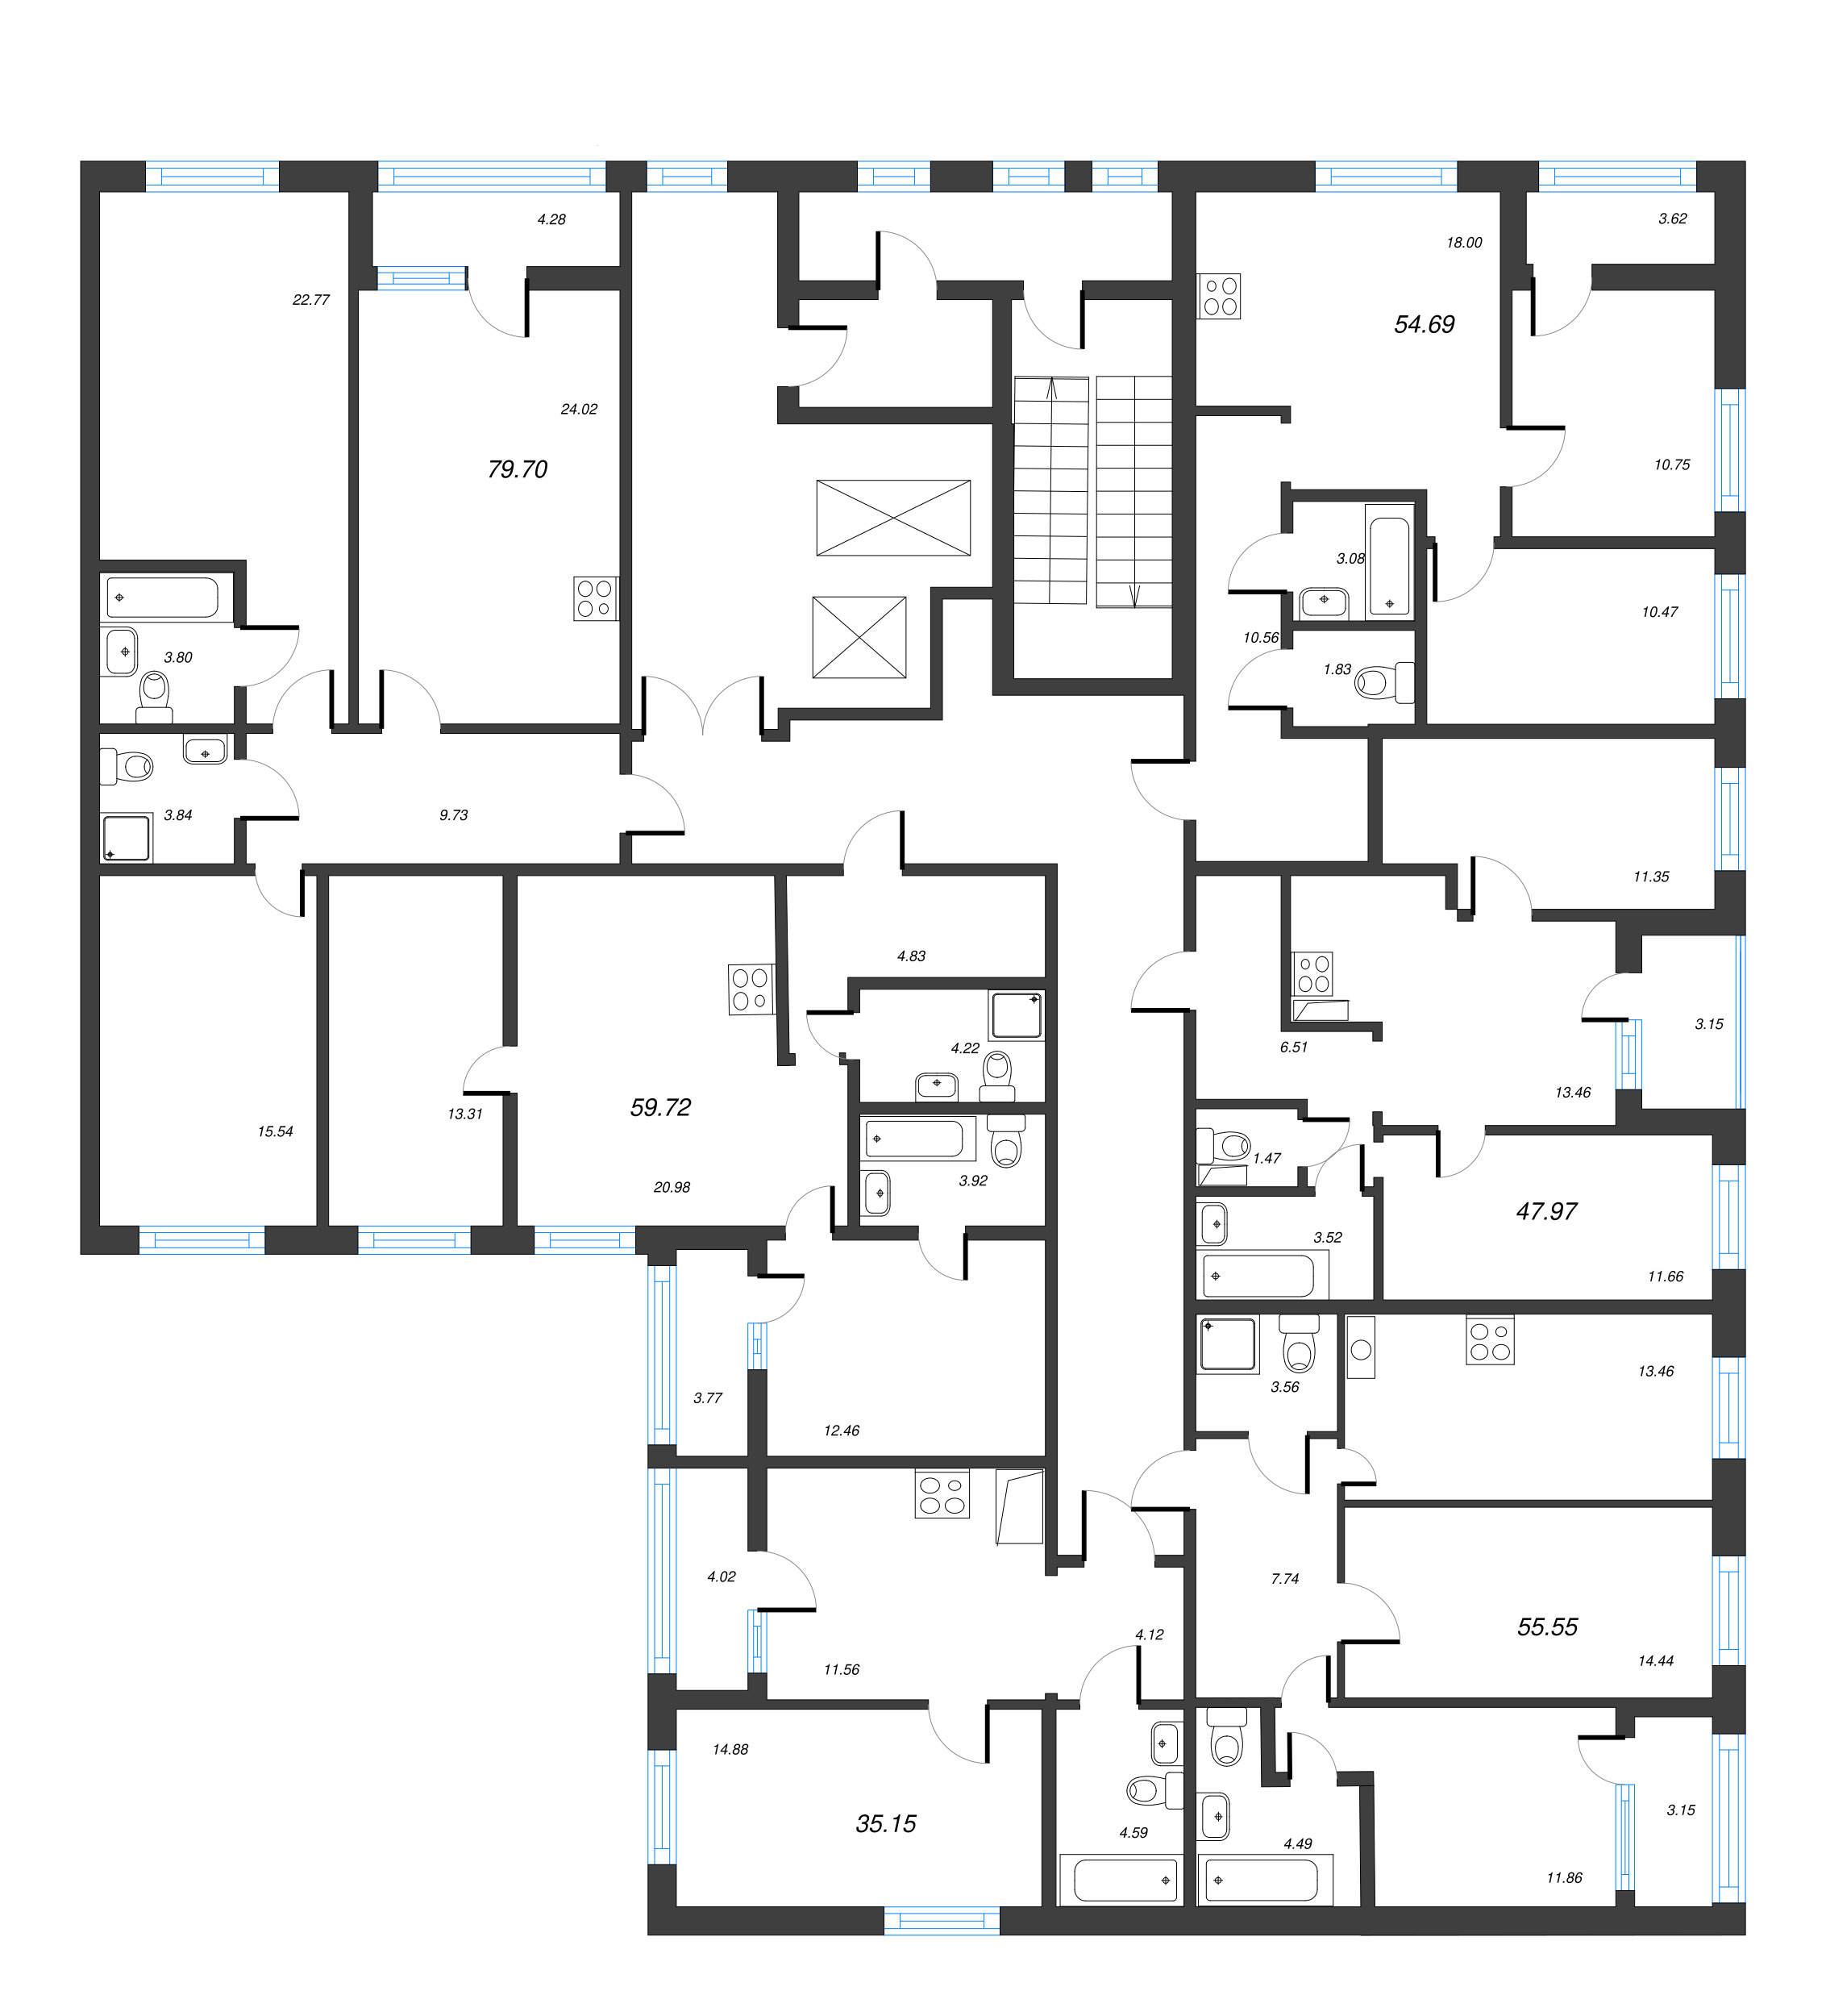 1-комнатная квартира, 35.15 м² в ЖК "Чёрная речка от Ильича" - планировка этажа